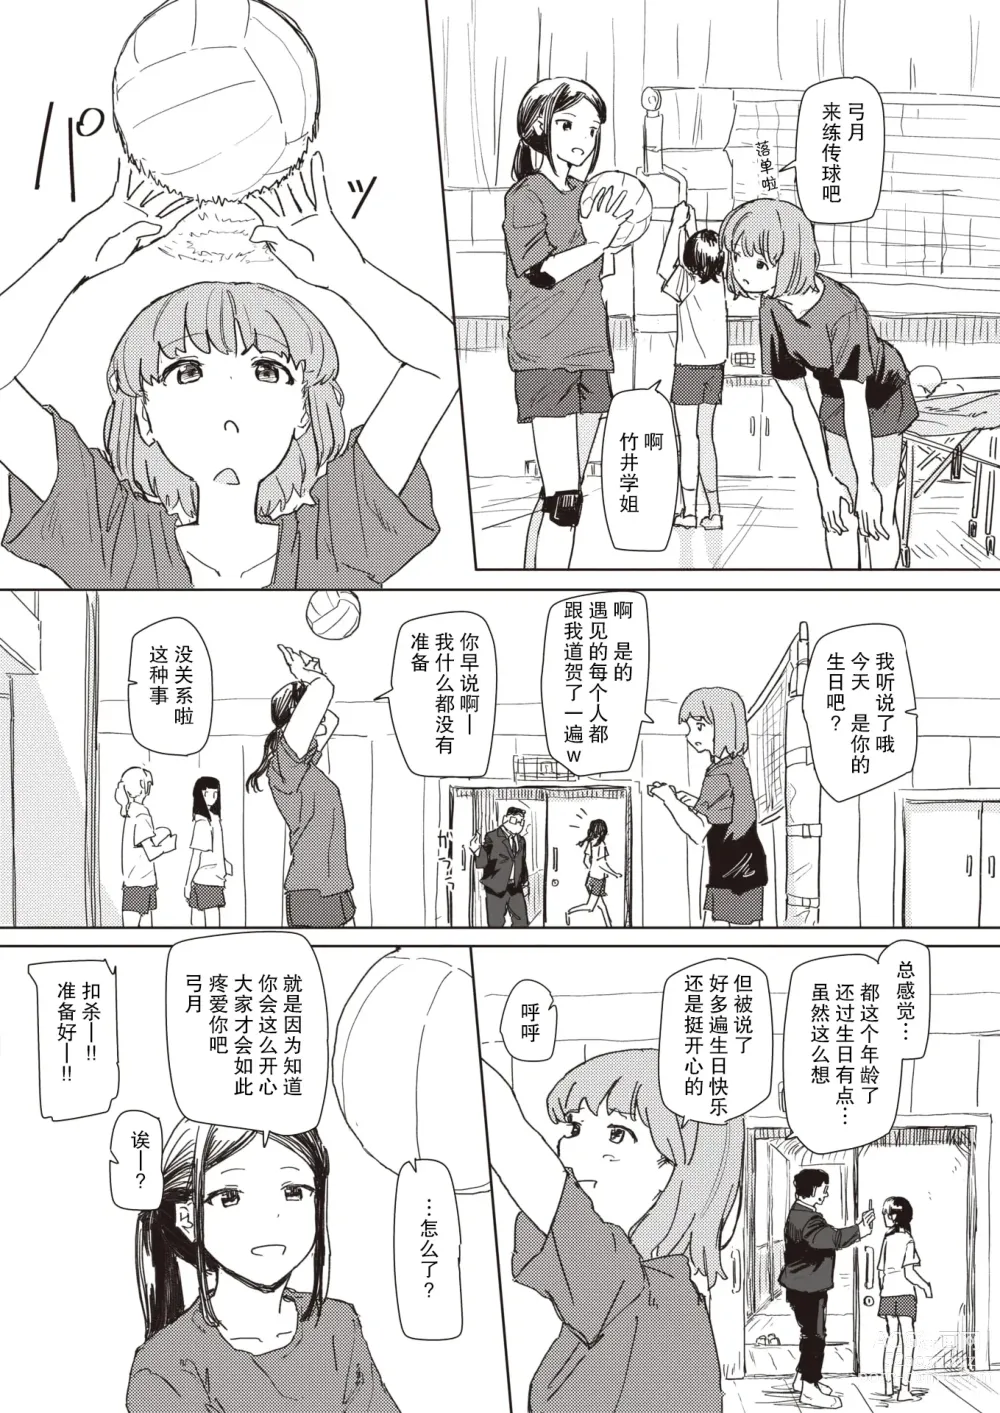 Page 7 of manga Unhappy Birthday